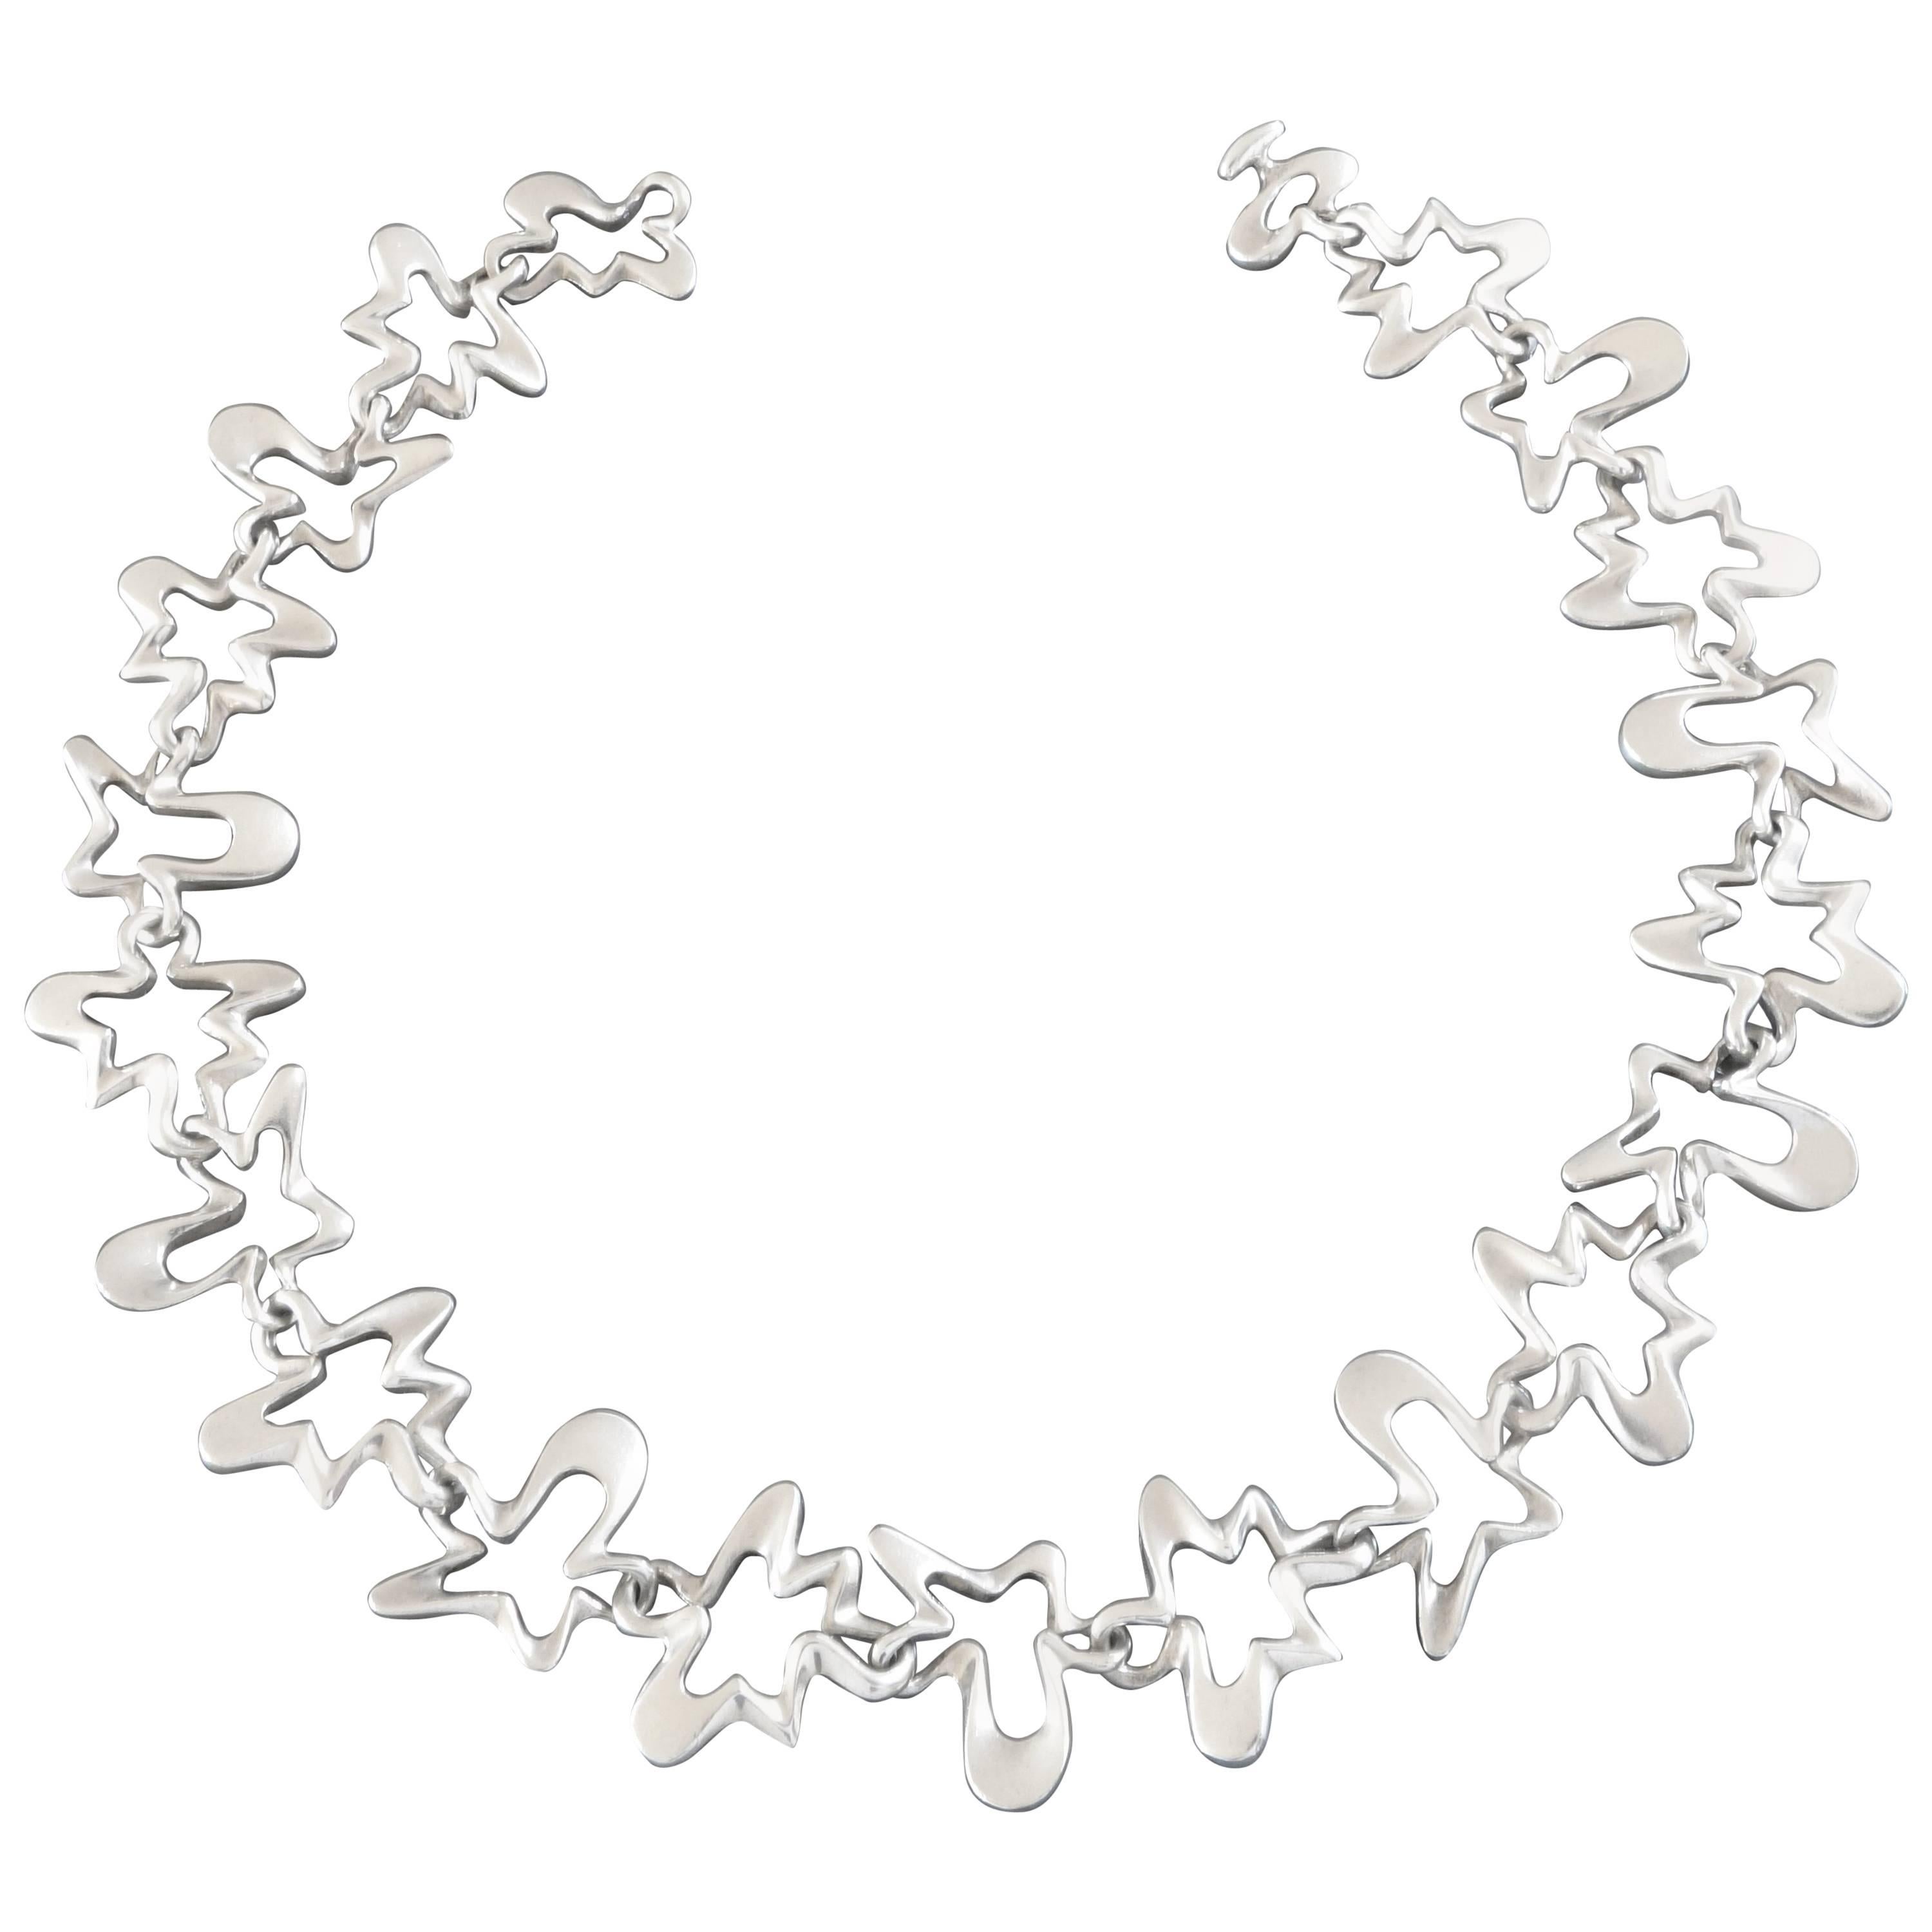 Georg Jensen Henning Koppel Iconic Scandinavian Modernist Silver Necklace #88 B For Sale